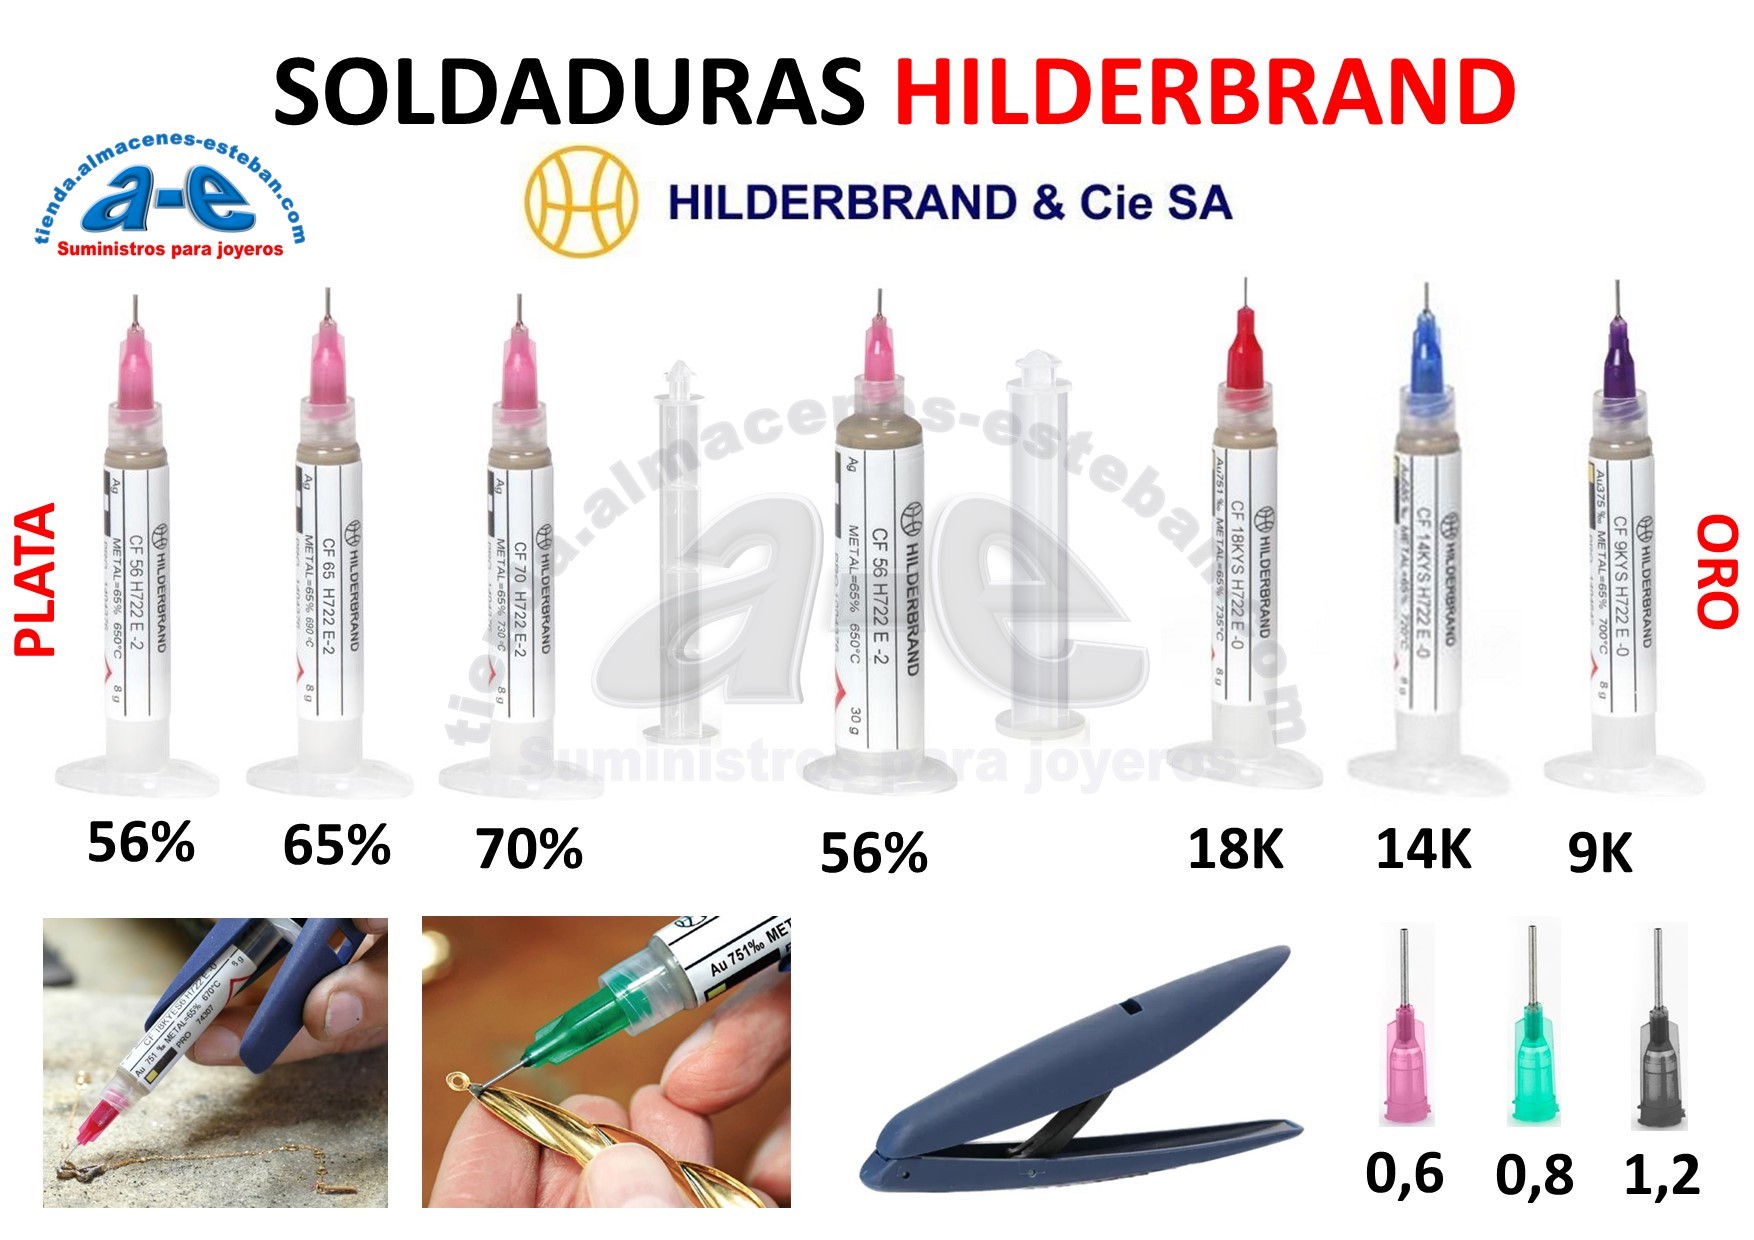 SOLDADURAS HILDERBRAND